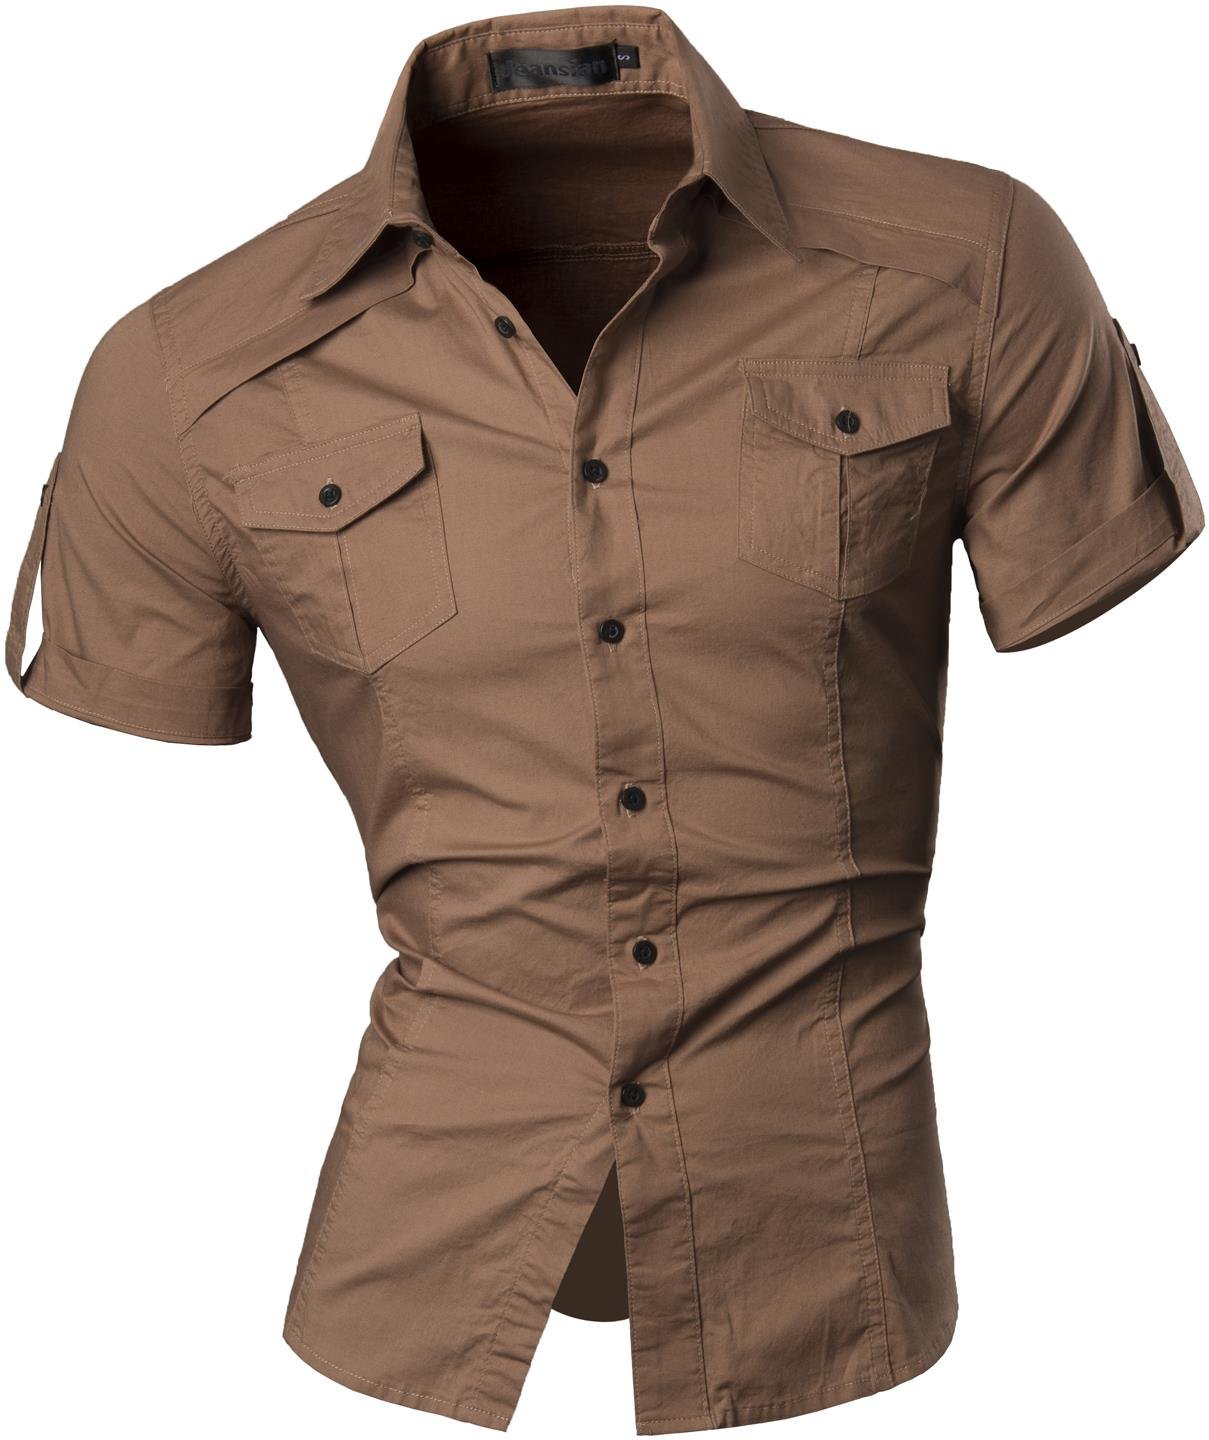 jeansian Herren Freizeit Hemden Shirt Tops Mode Langarmlig Men's Casual Dress Slim Fit 8360 Khaki L